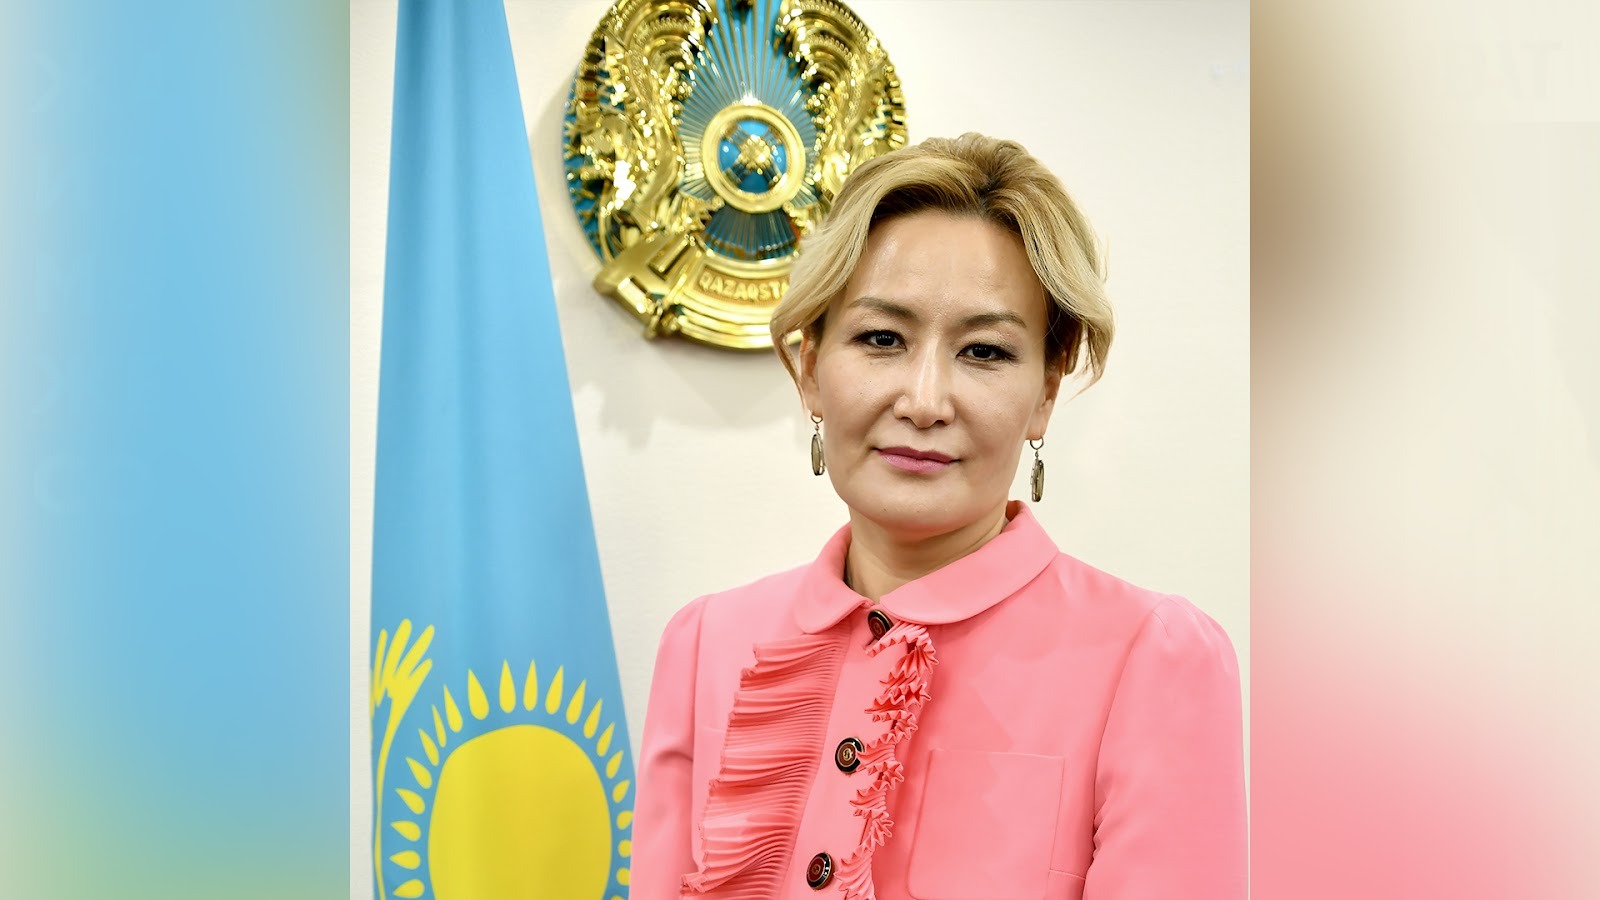 кто министр образования в казахстане